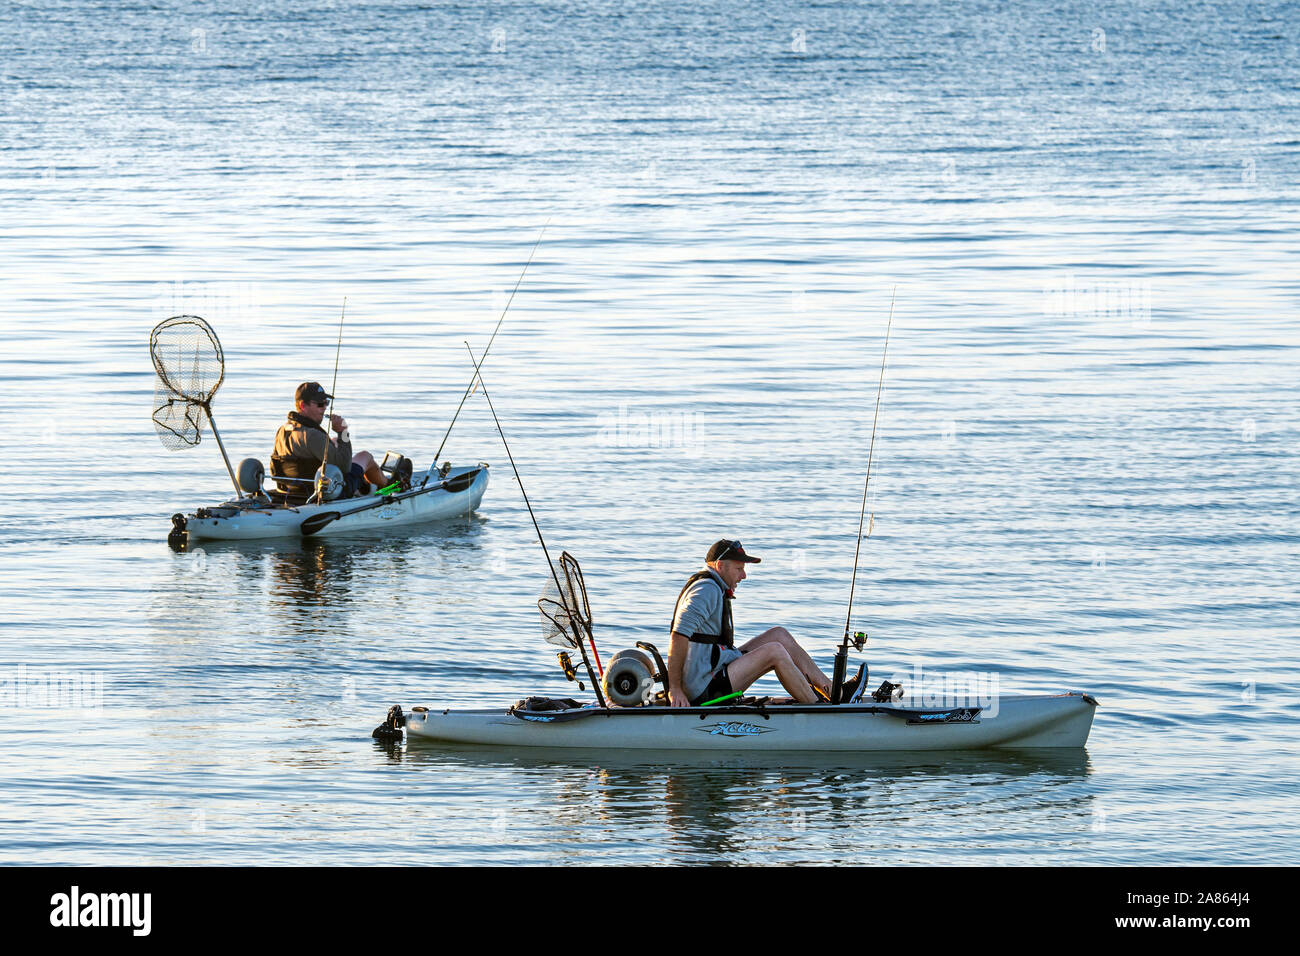 Zwei angler angeln vom Pedal Antrieb Kajaks/Pedal driven Kayak bei Sonnenuntergang Stockfoto